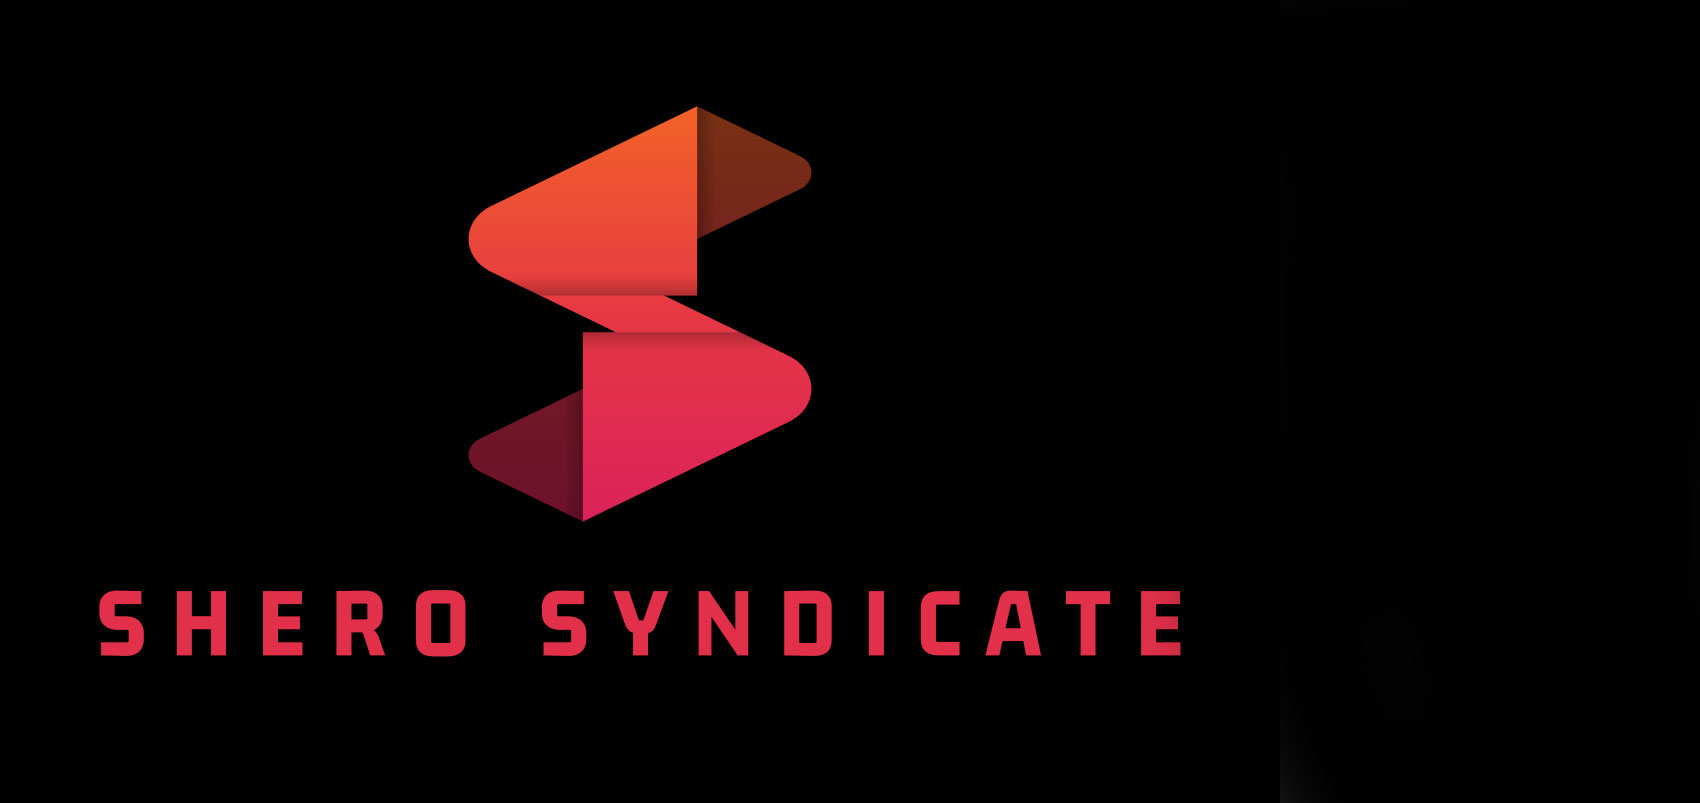 Shero Syndicate